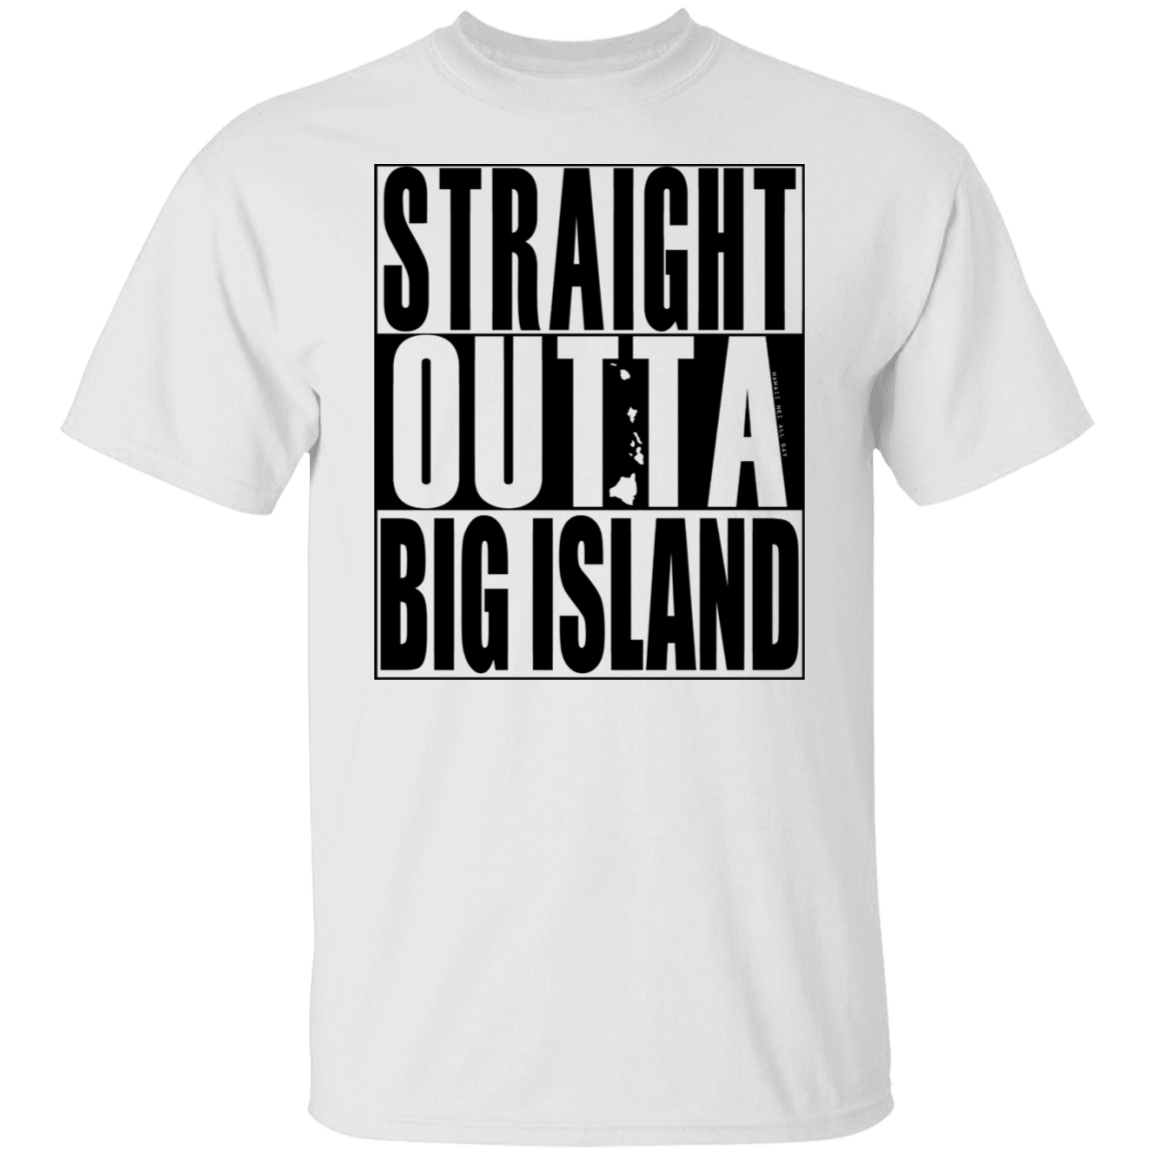 Straight Outta Big Island(black ink) T-Shirt